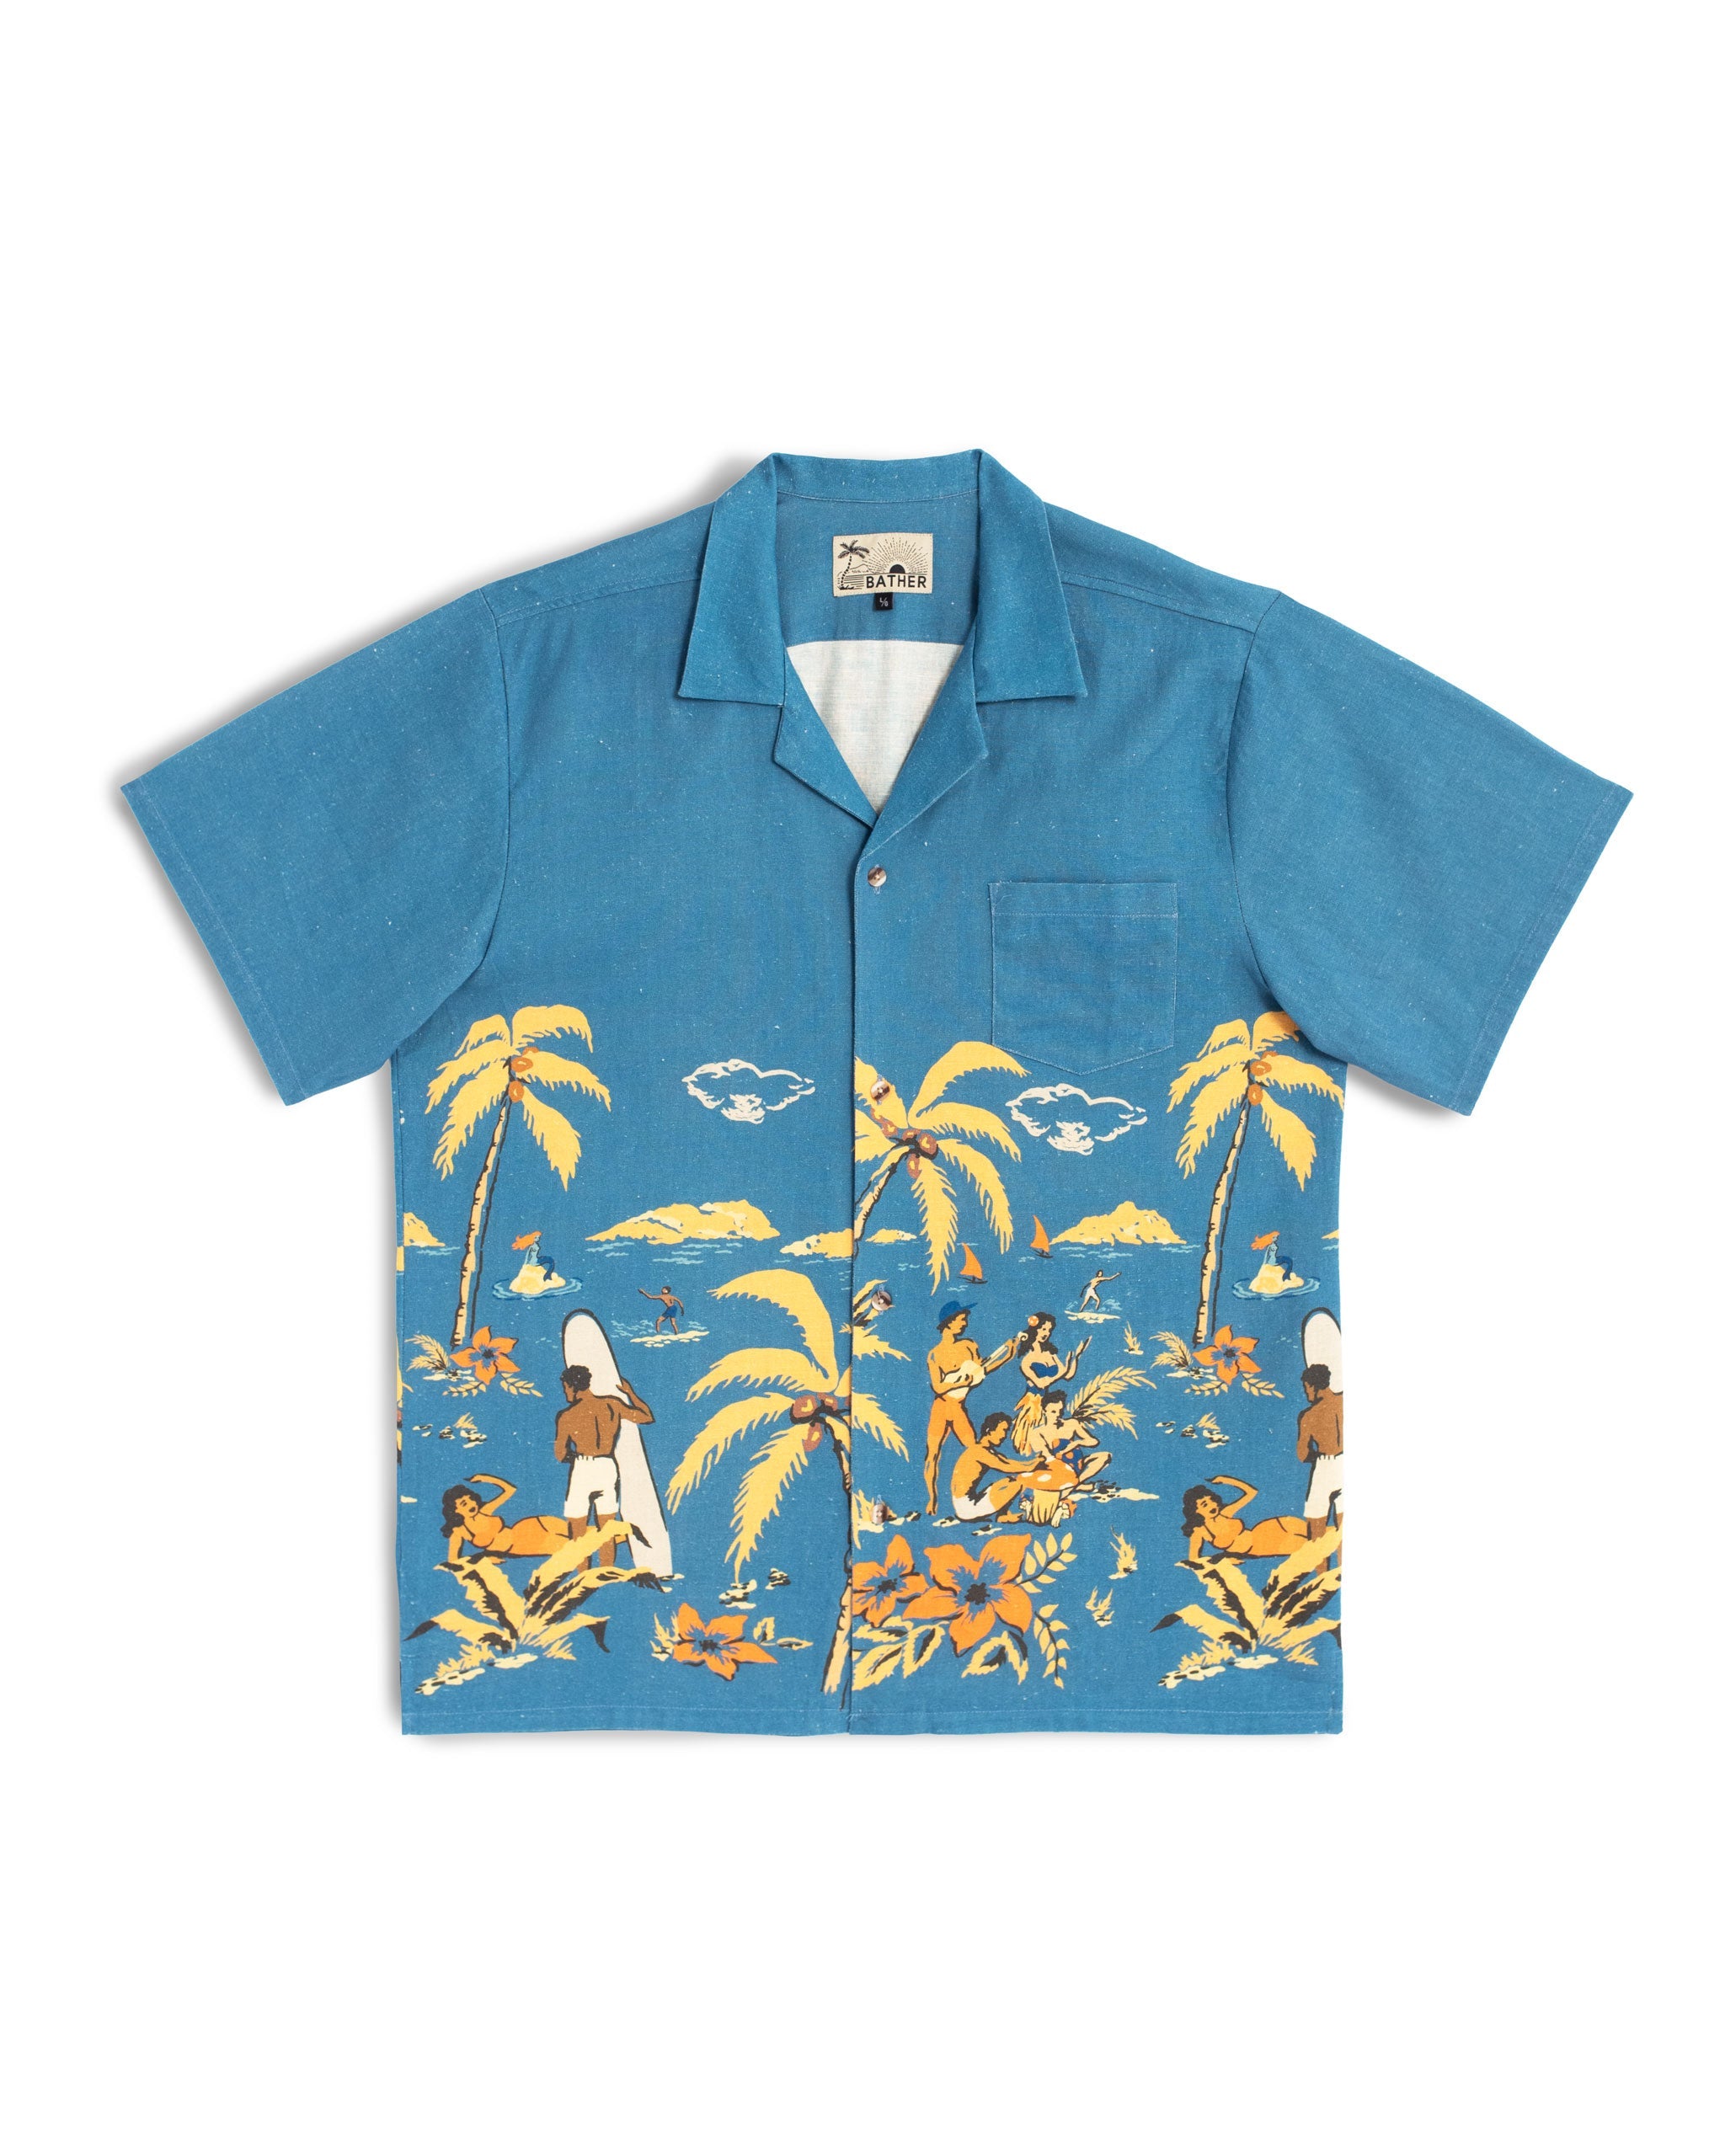 Blue linen camp shirt with Hawaiian-inspired printed beach scene